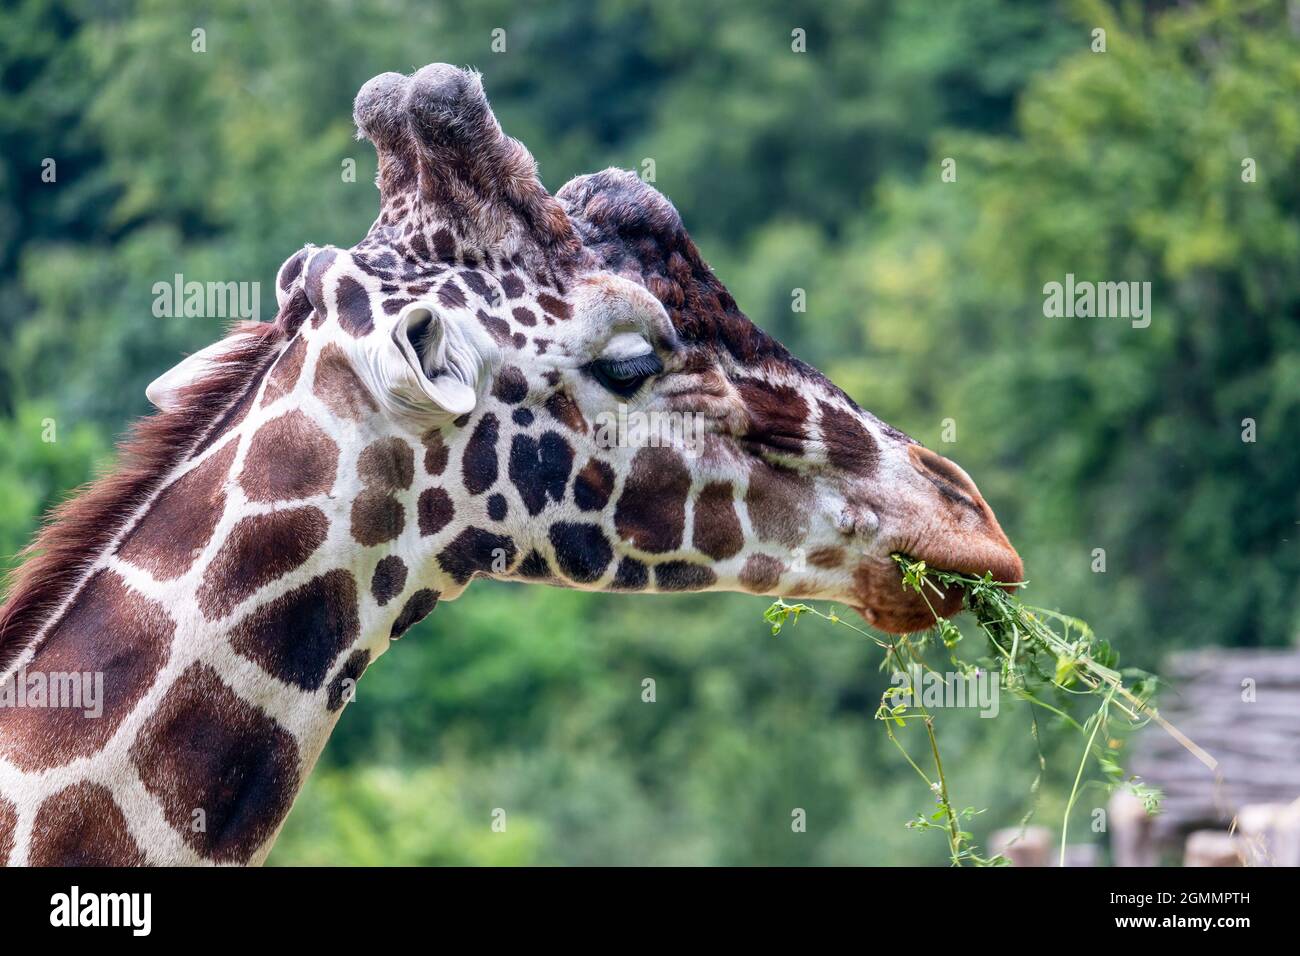 giraffe eating grass - giraffe head, green trees in the background Stock Photo